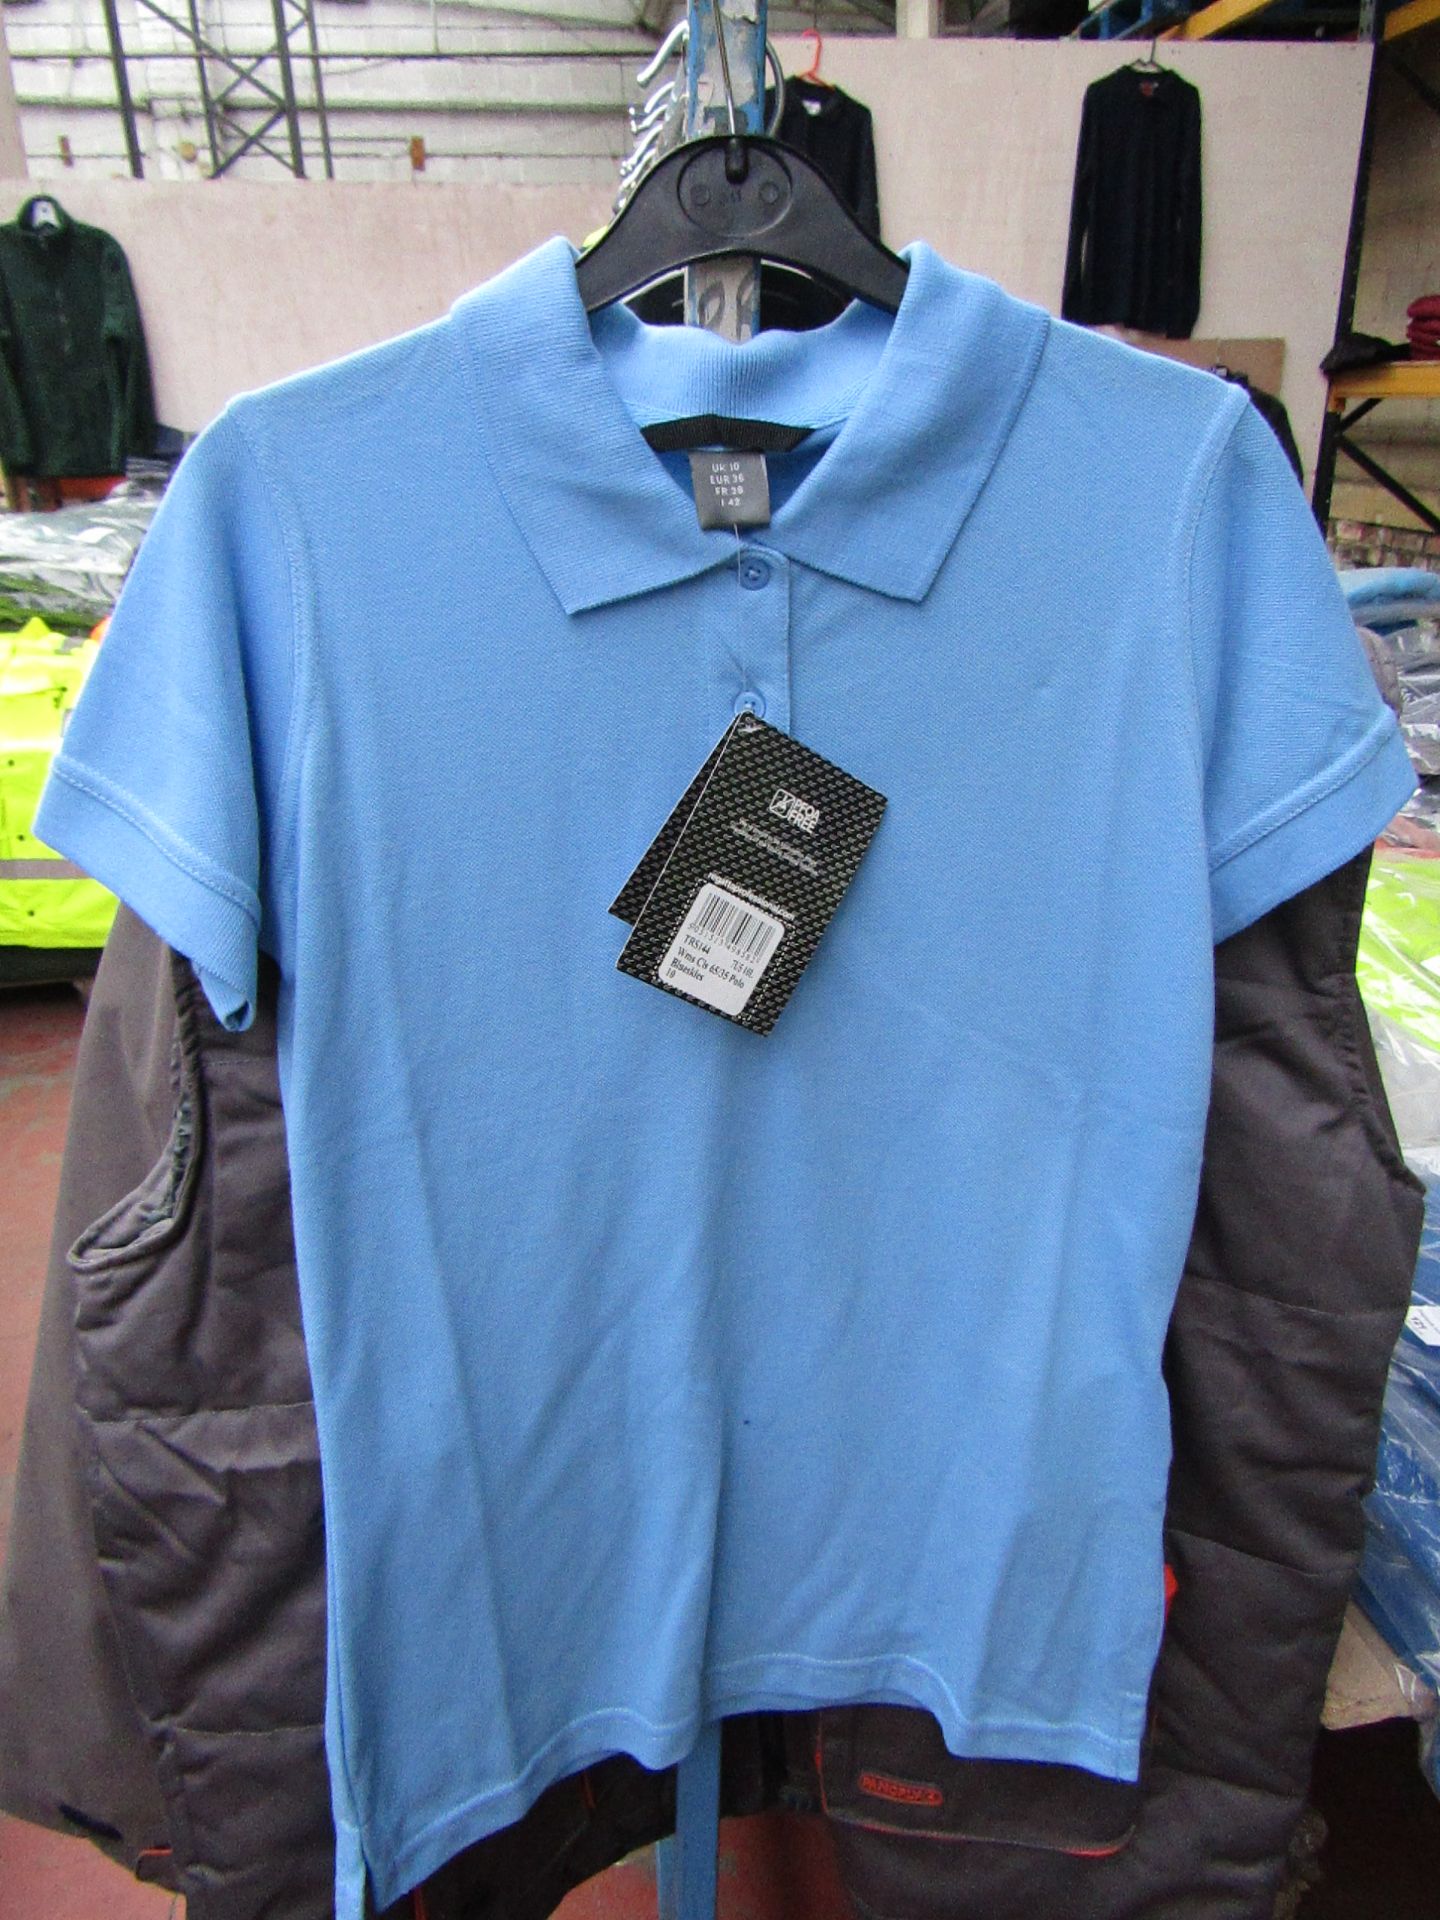 2x Ladies Regatta Blueskies Polo Shirt, Size 16. New in Packaging